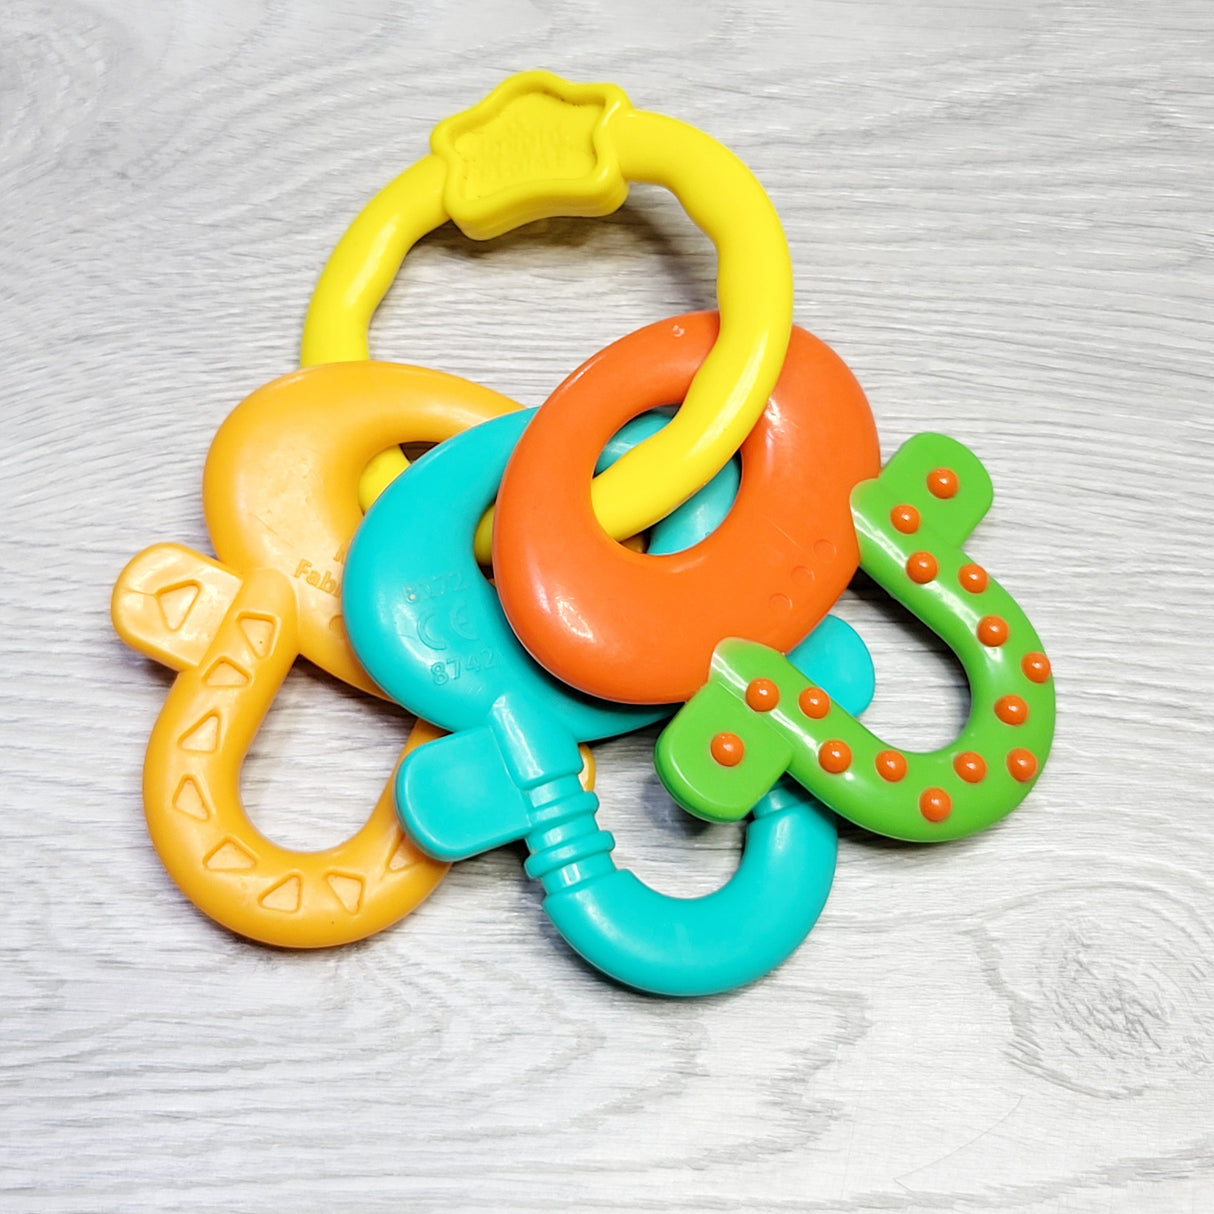 RBRSN2 - Plastic key toys